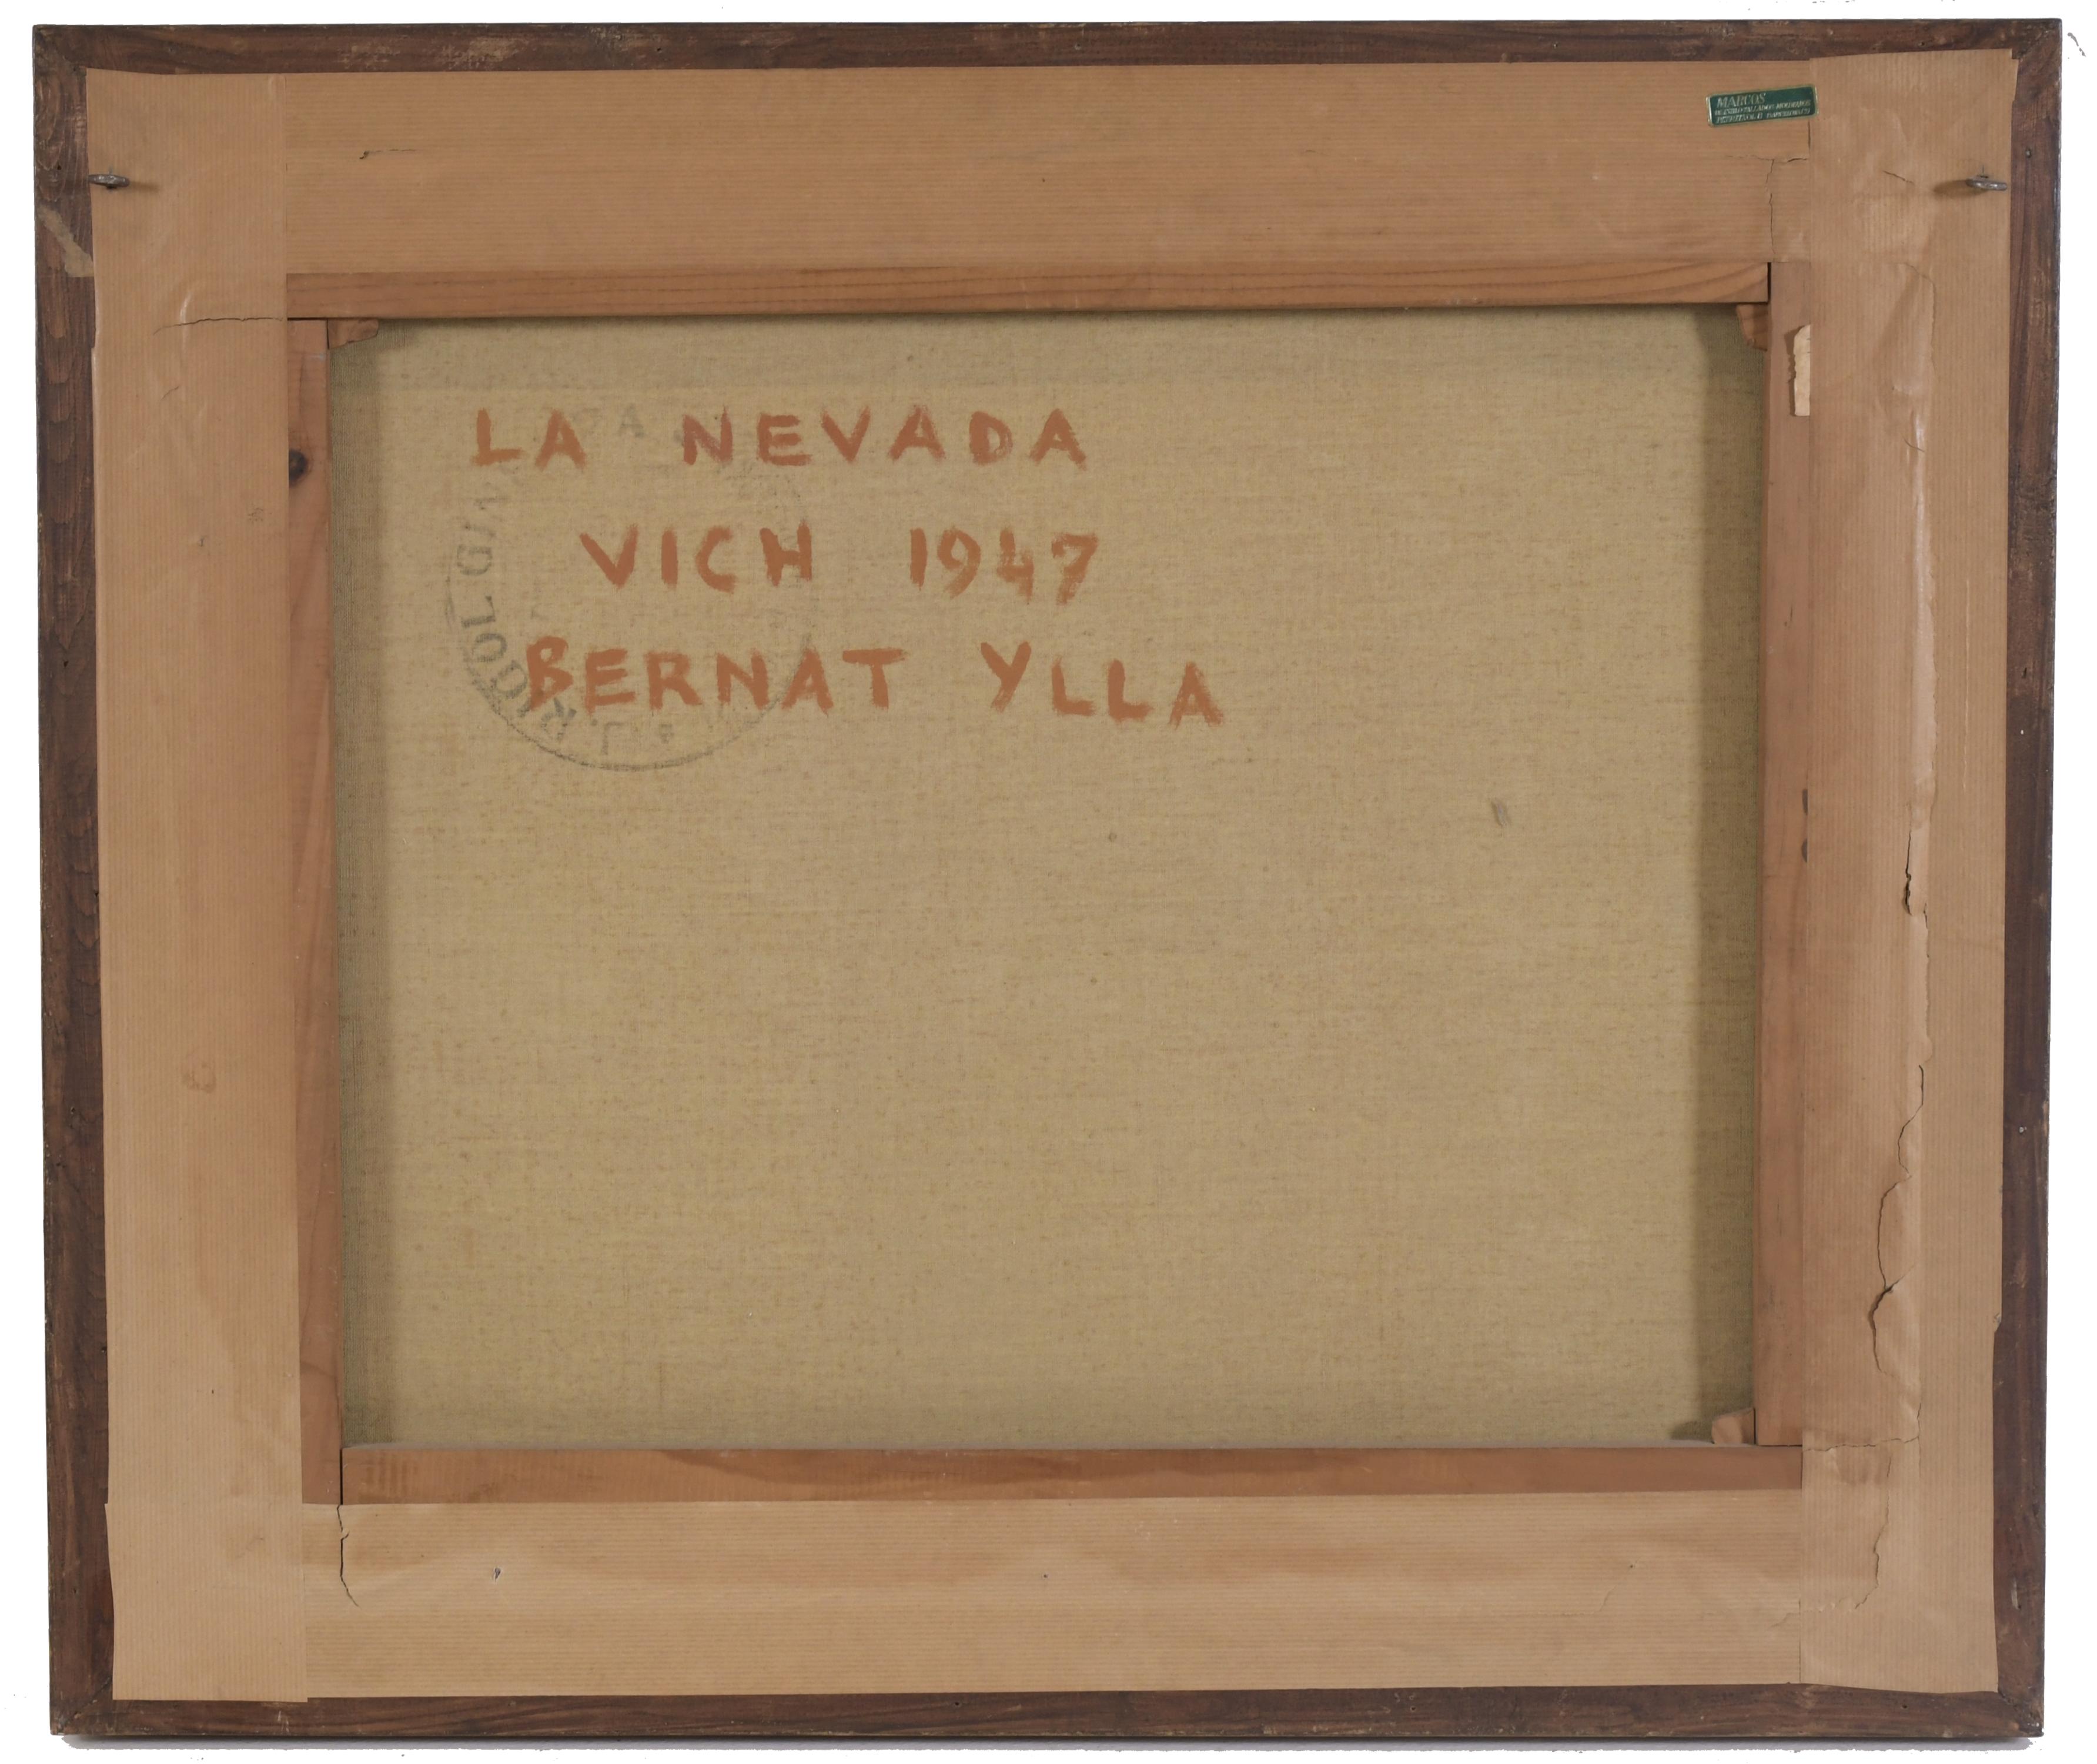 BERNAT YLLA (1916-1994).  "LA NEVADA", VICH, 1947.